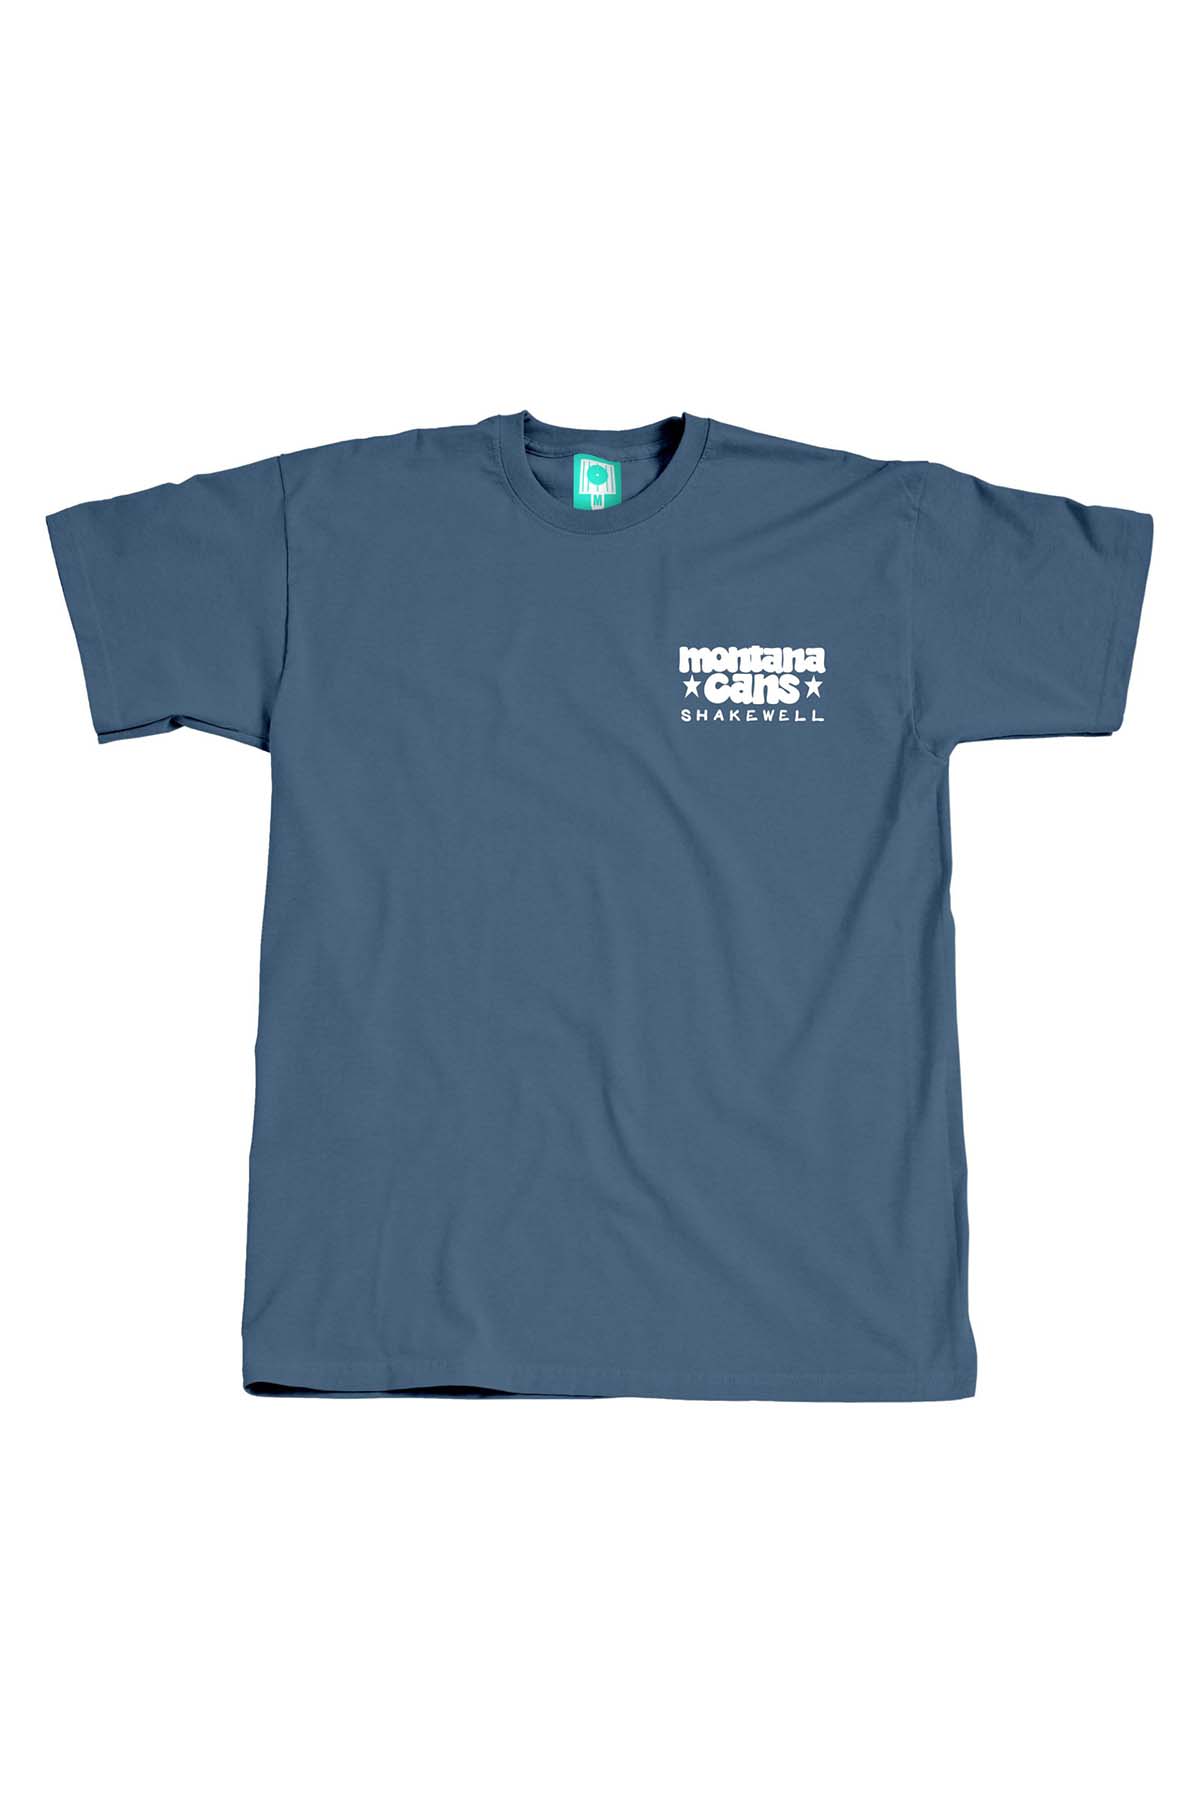 Montana MC Blue T-Shirt by Tres